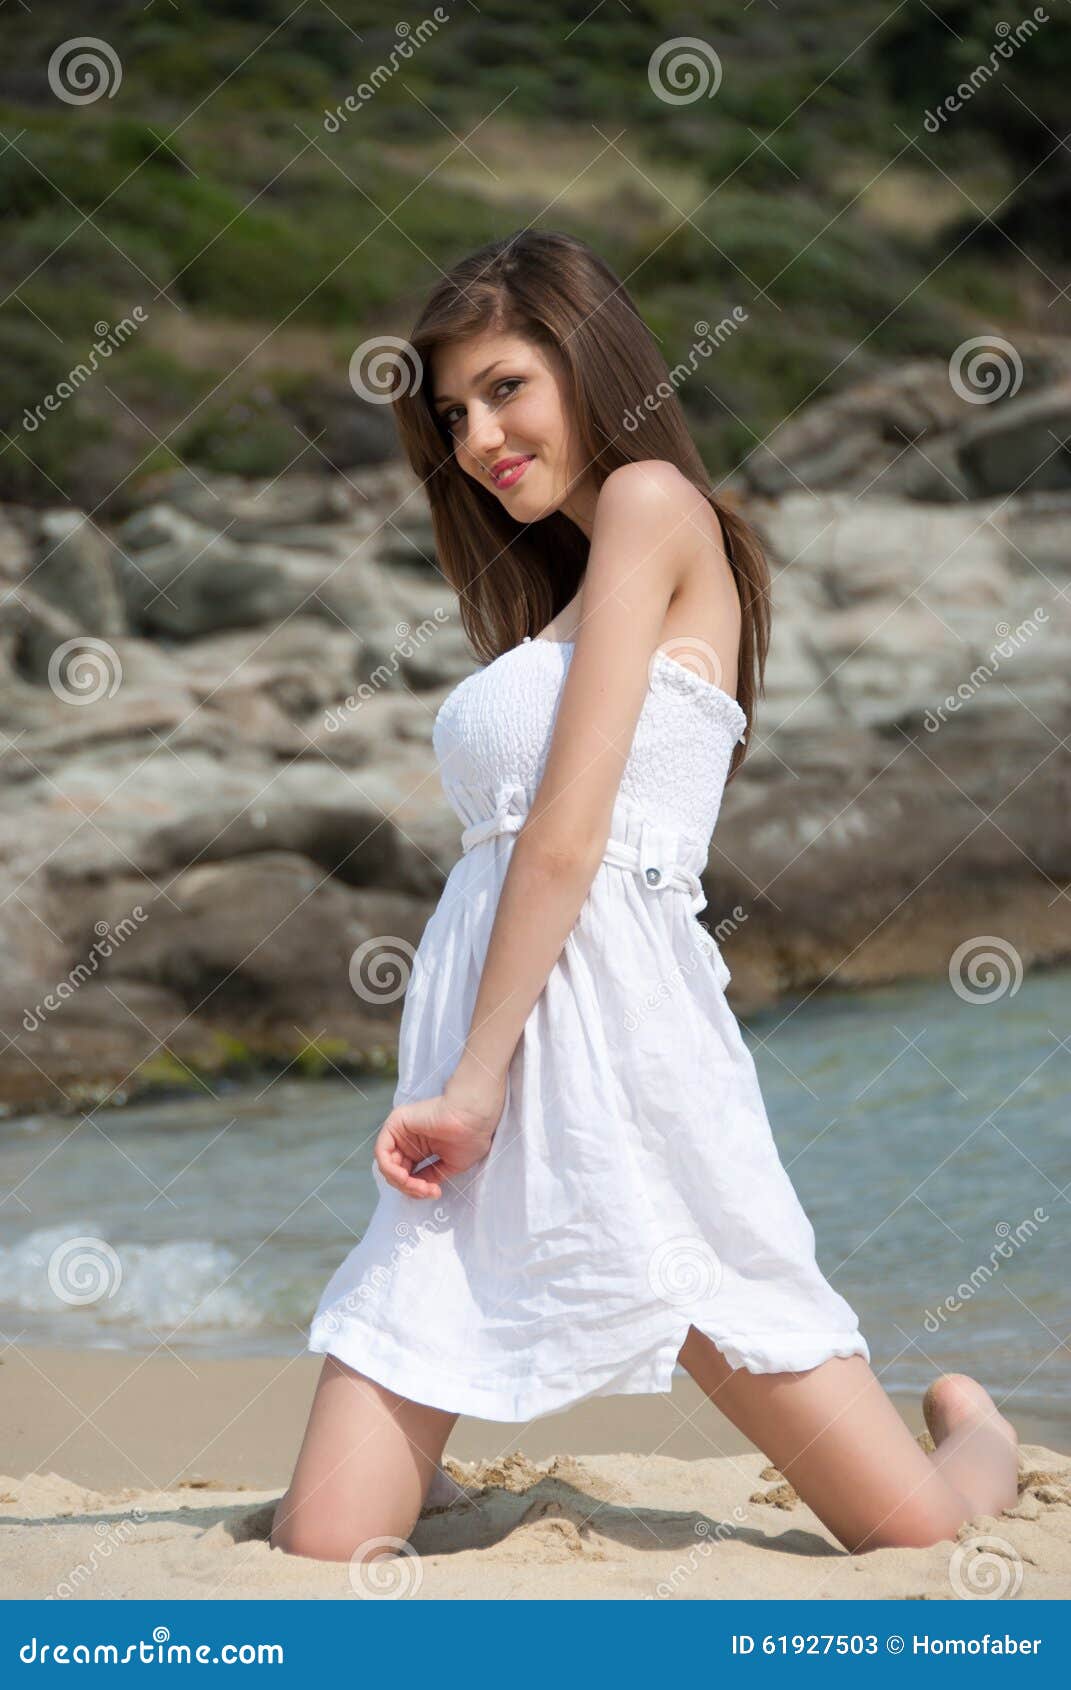 Buy > girls white beach dress > in stock